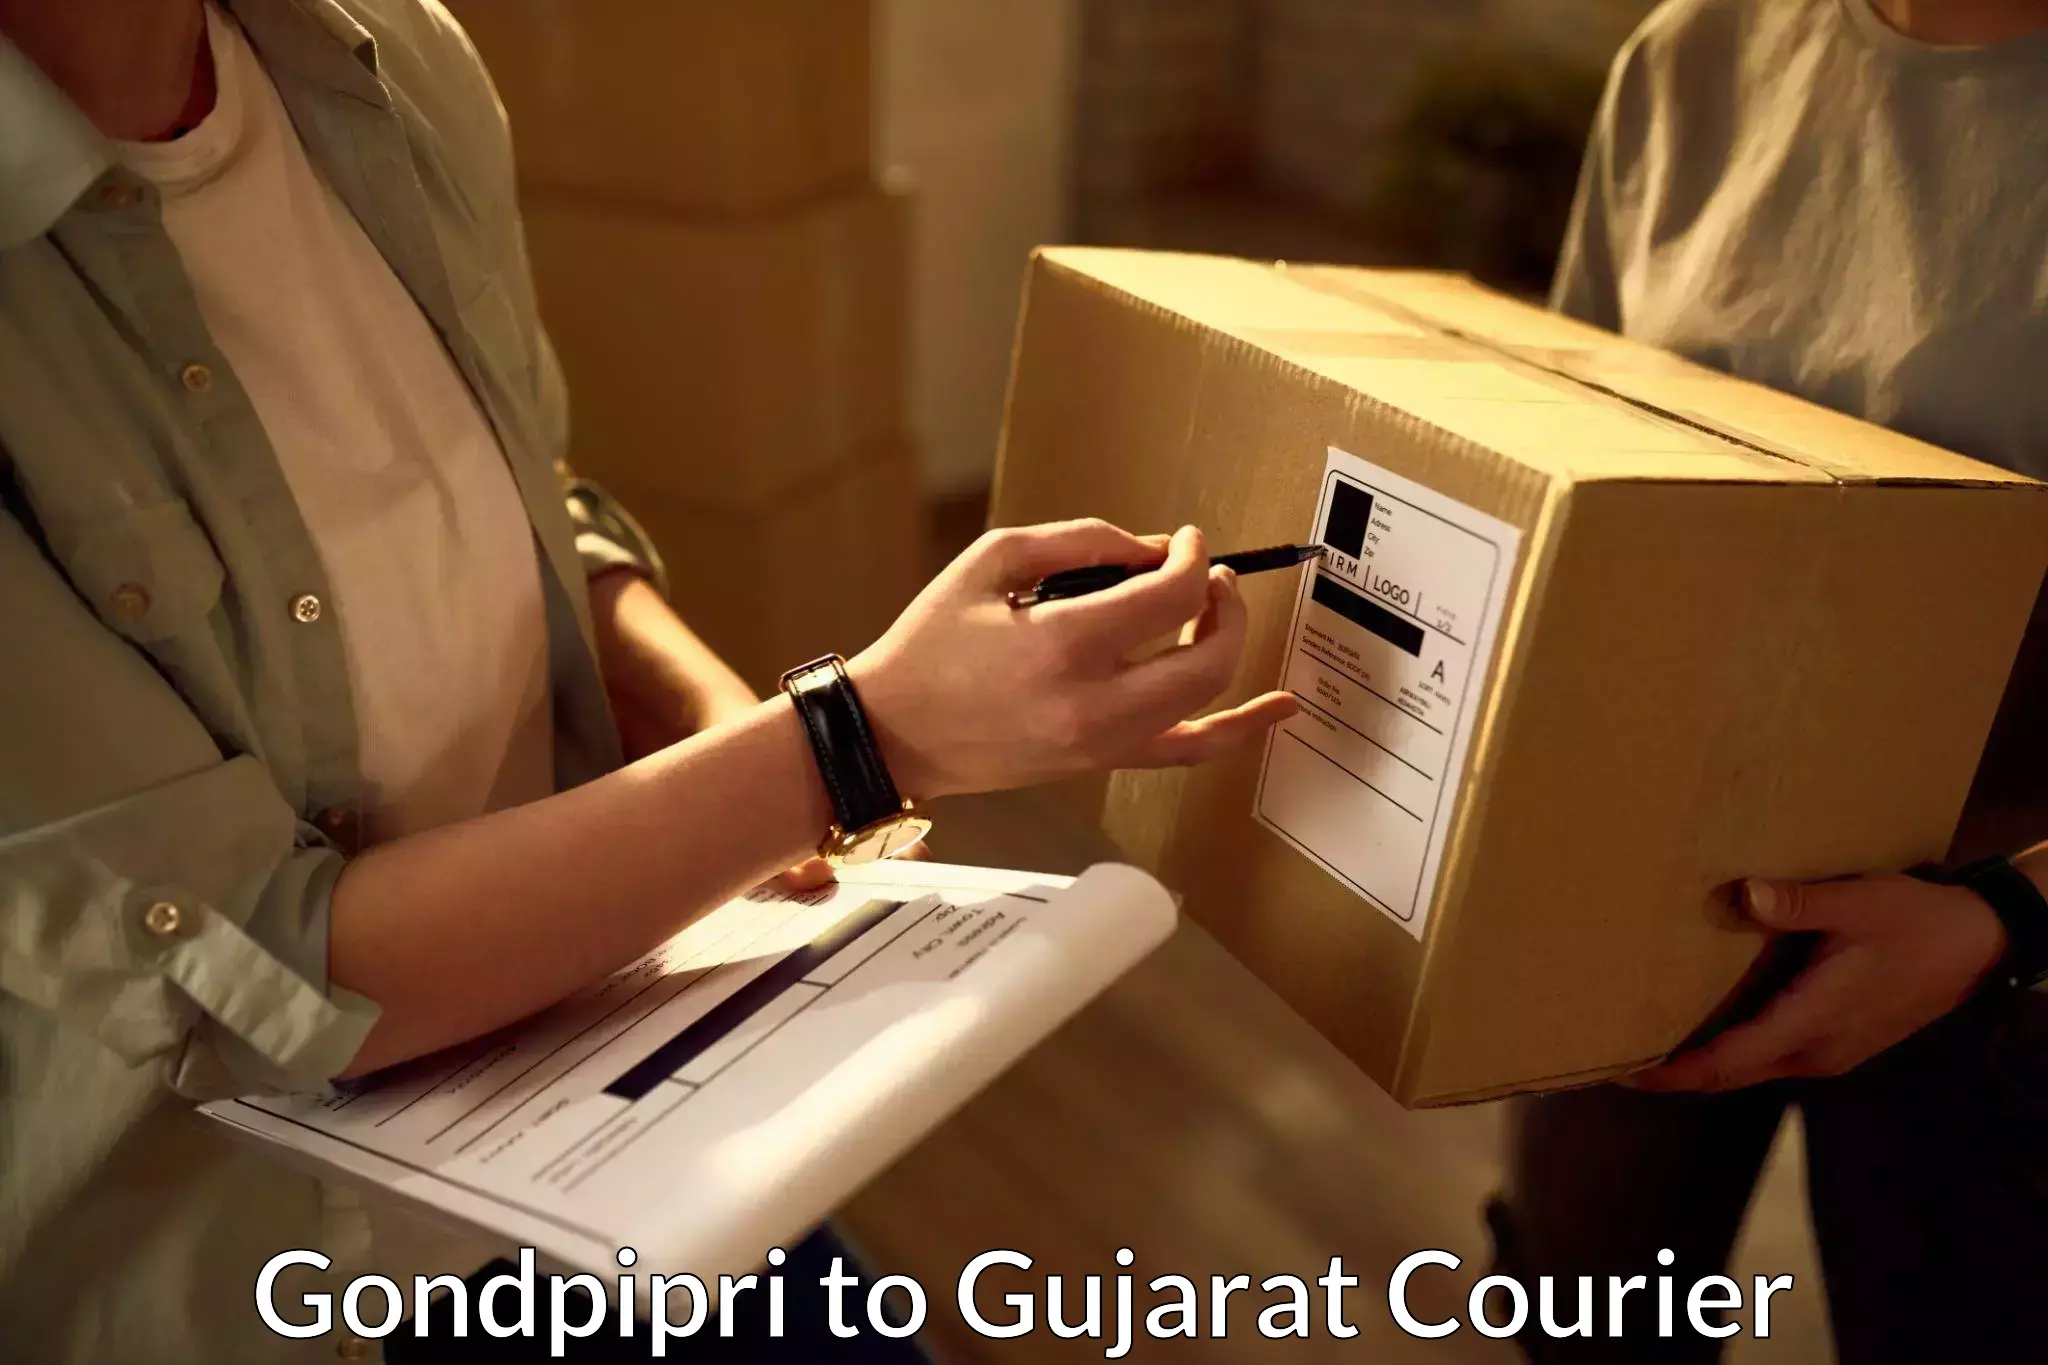 Nationwide shipping coverage Gondpipri to Gujarat